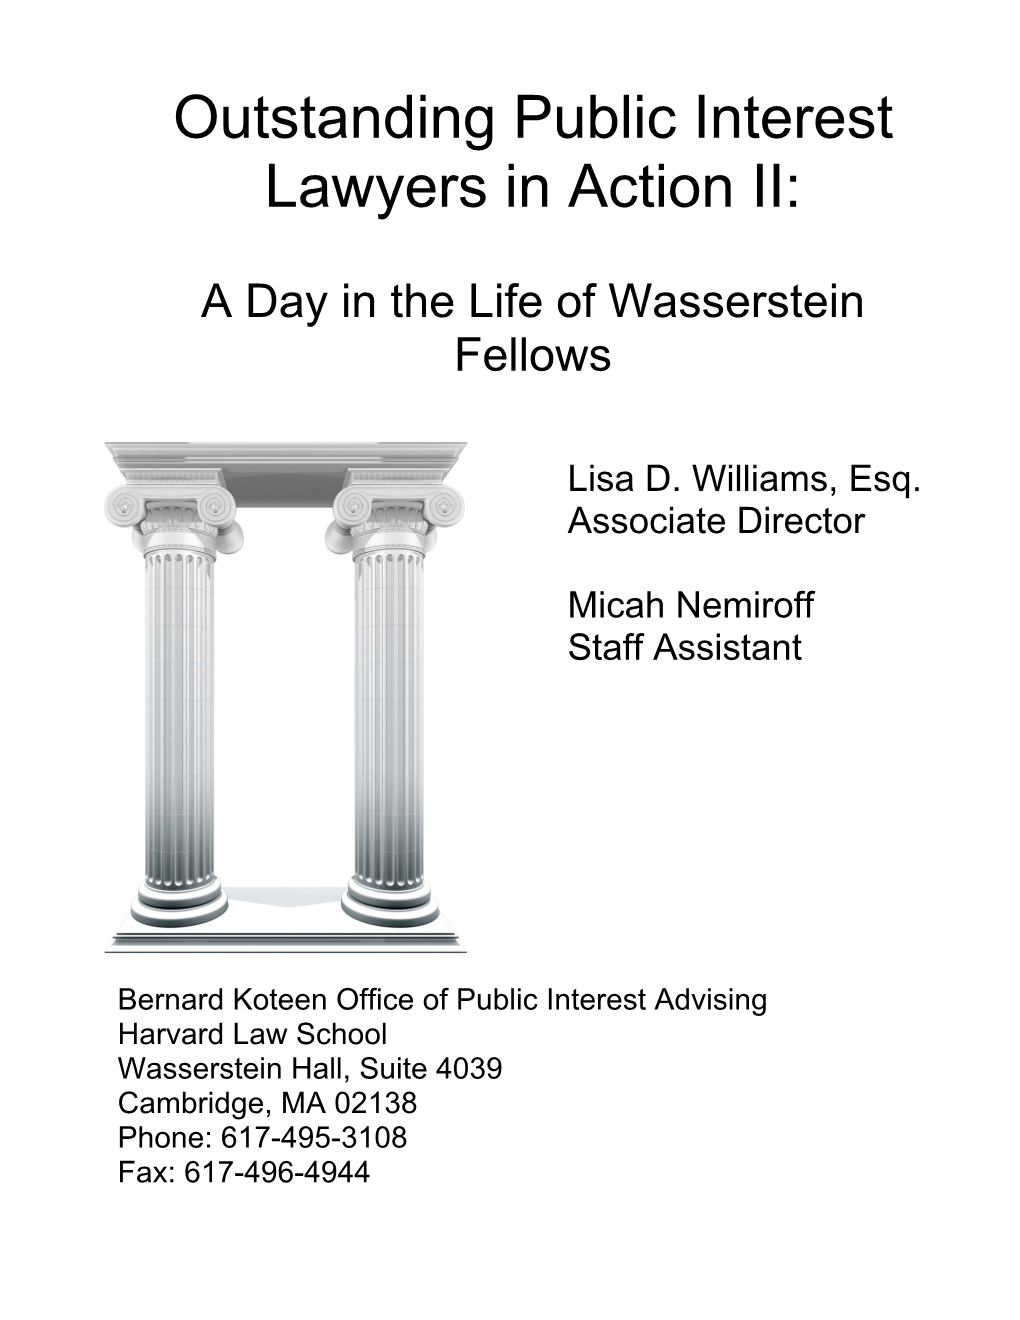 Outstanding Public Interest Lawyers in Action II